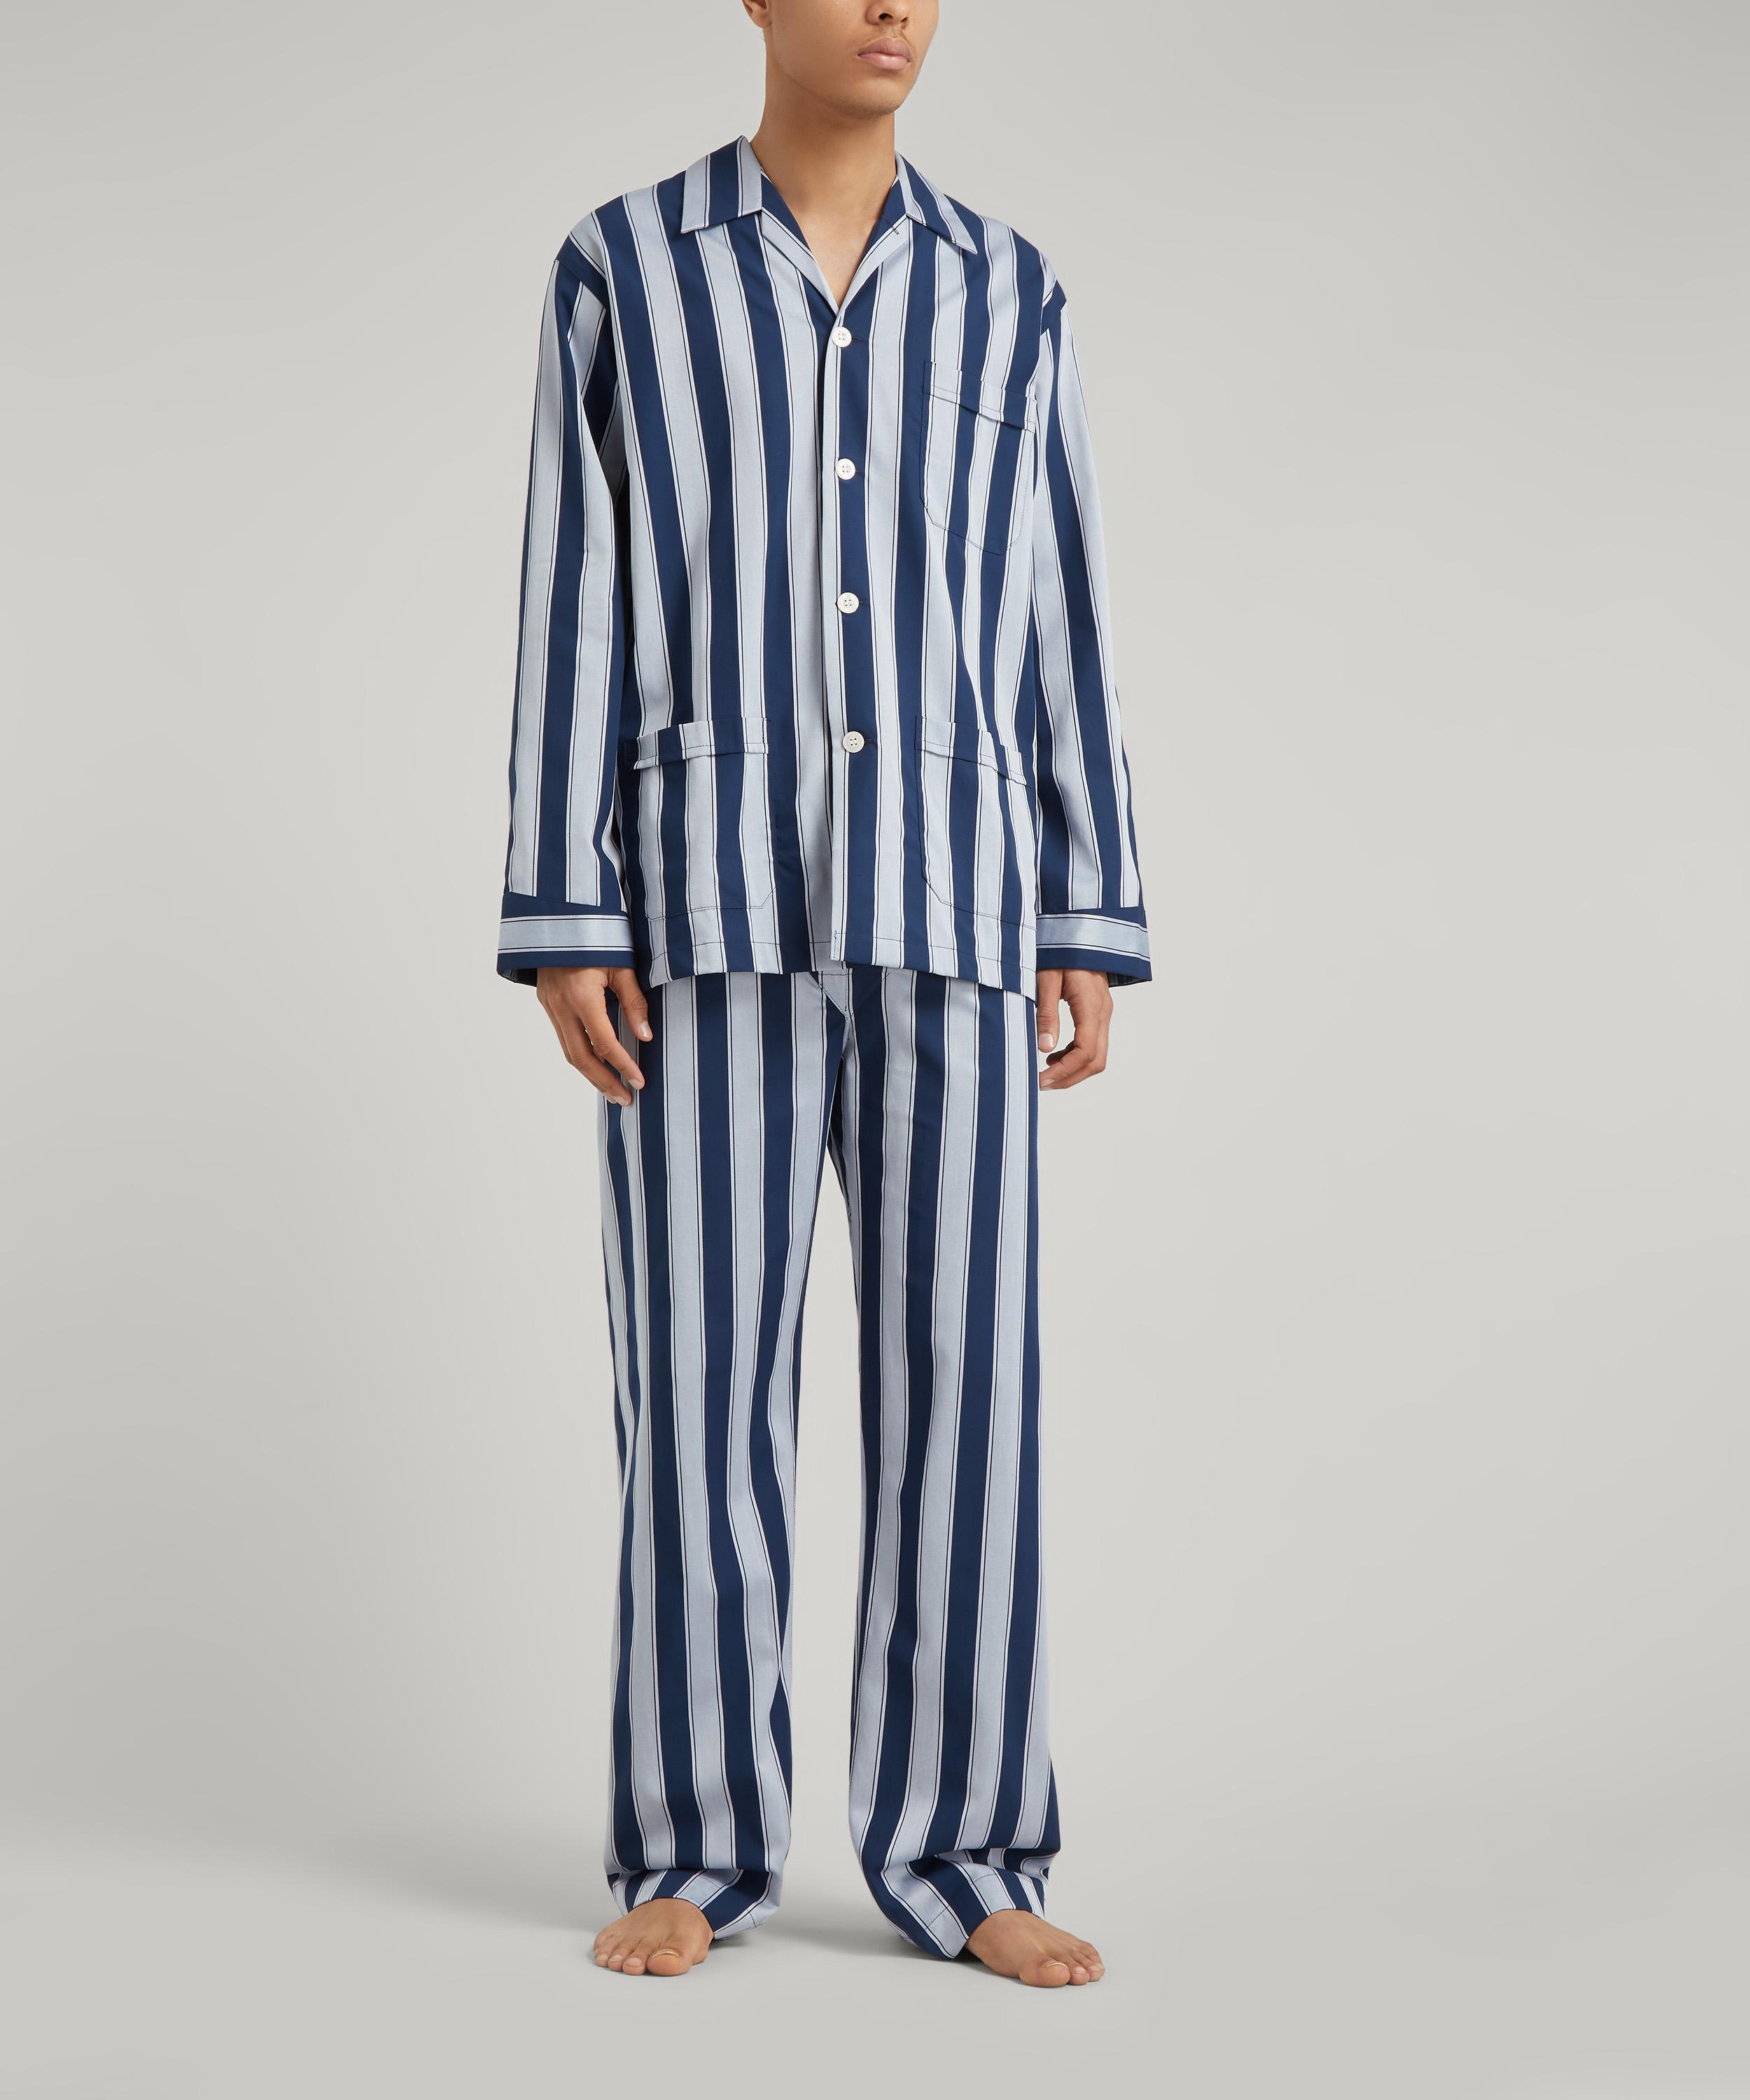 Derek Rose Men's Royal Satin Stripe Classic Fit Pyjama Set Navy